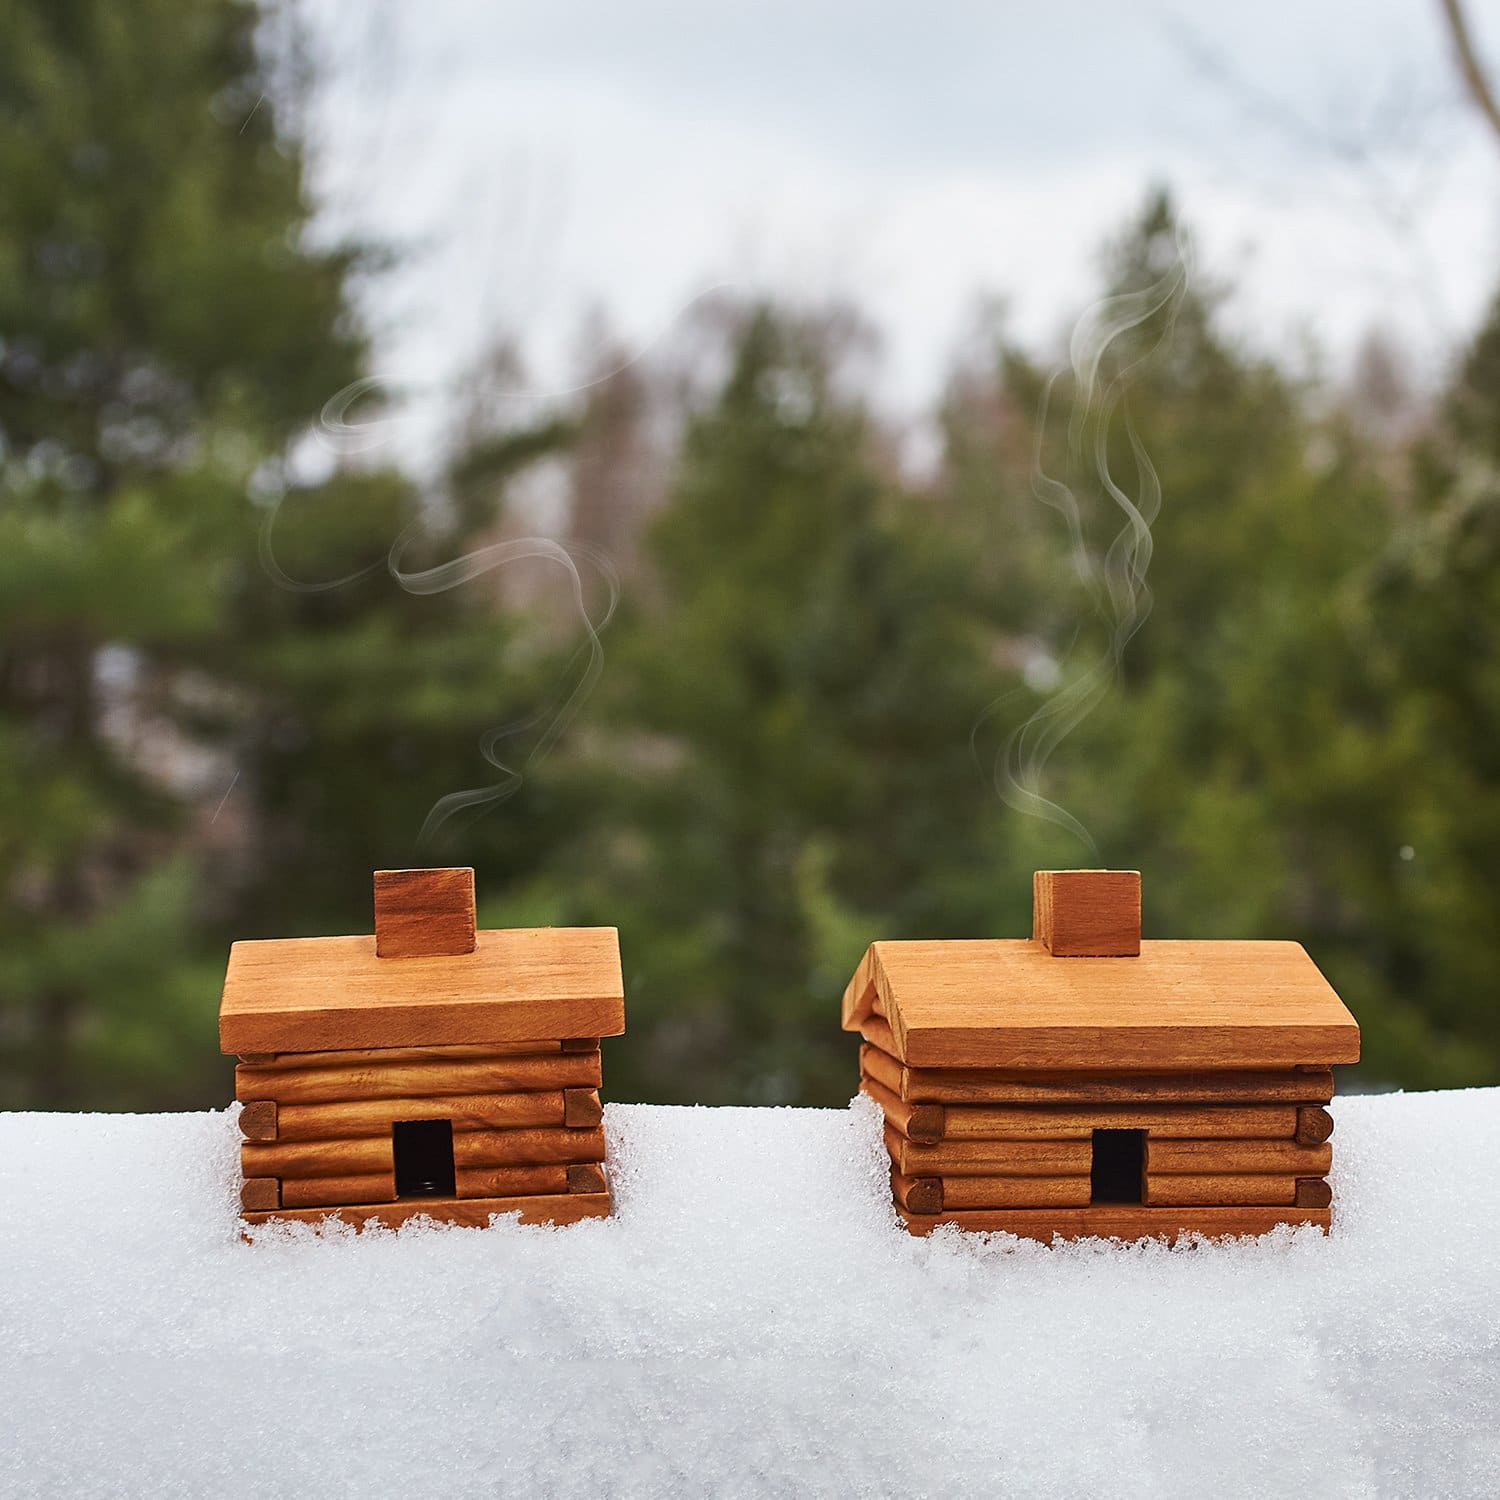 Small Log Cabin Incense and Burner - Balsam Fir Balsam - 